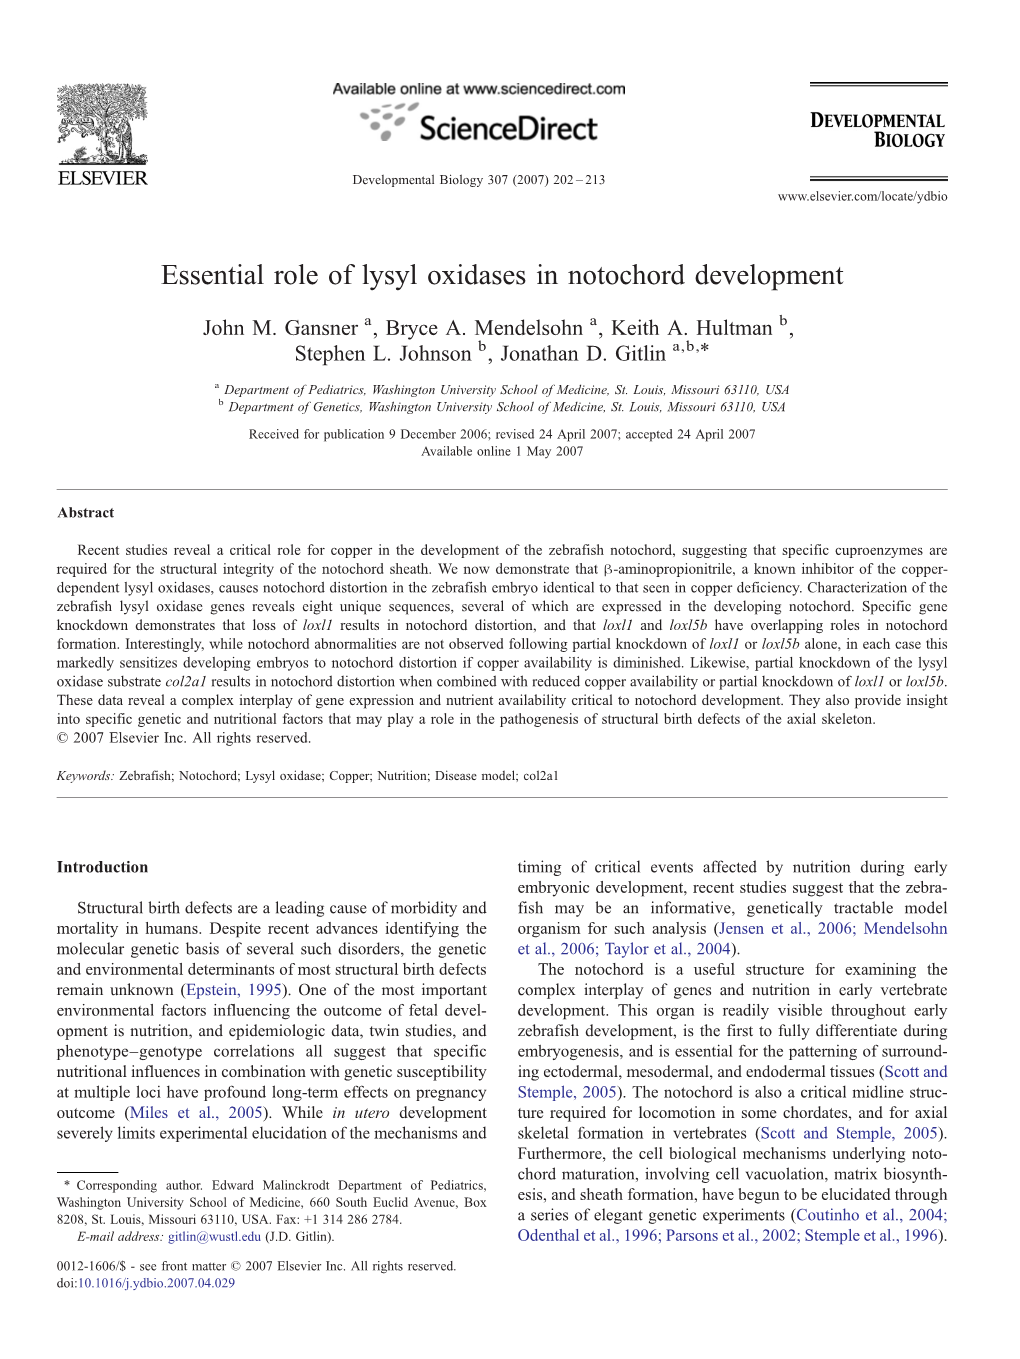 Essential Role of Lysyl Oxidases in Notochord Development